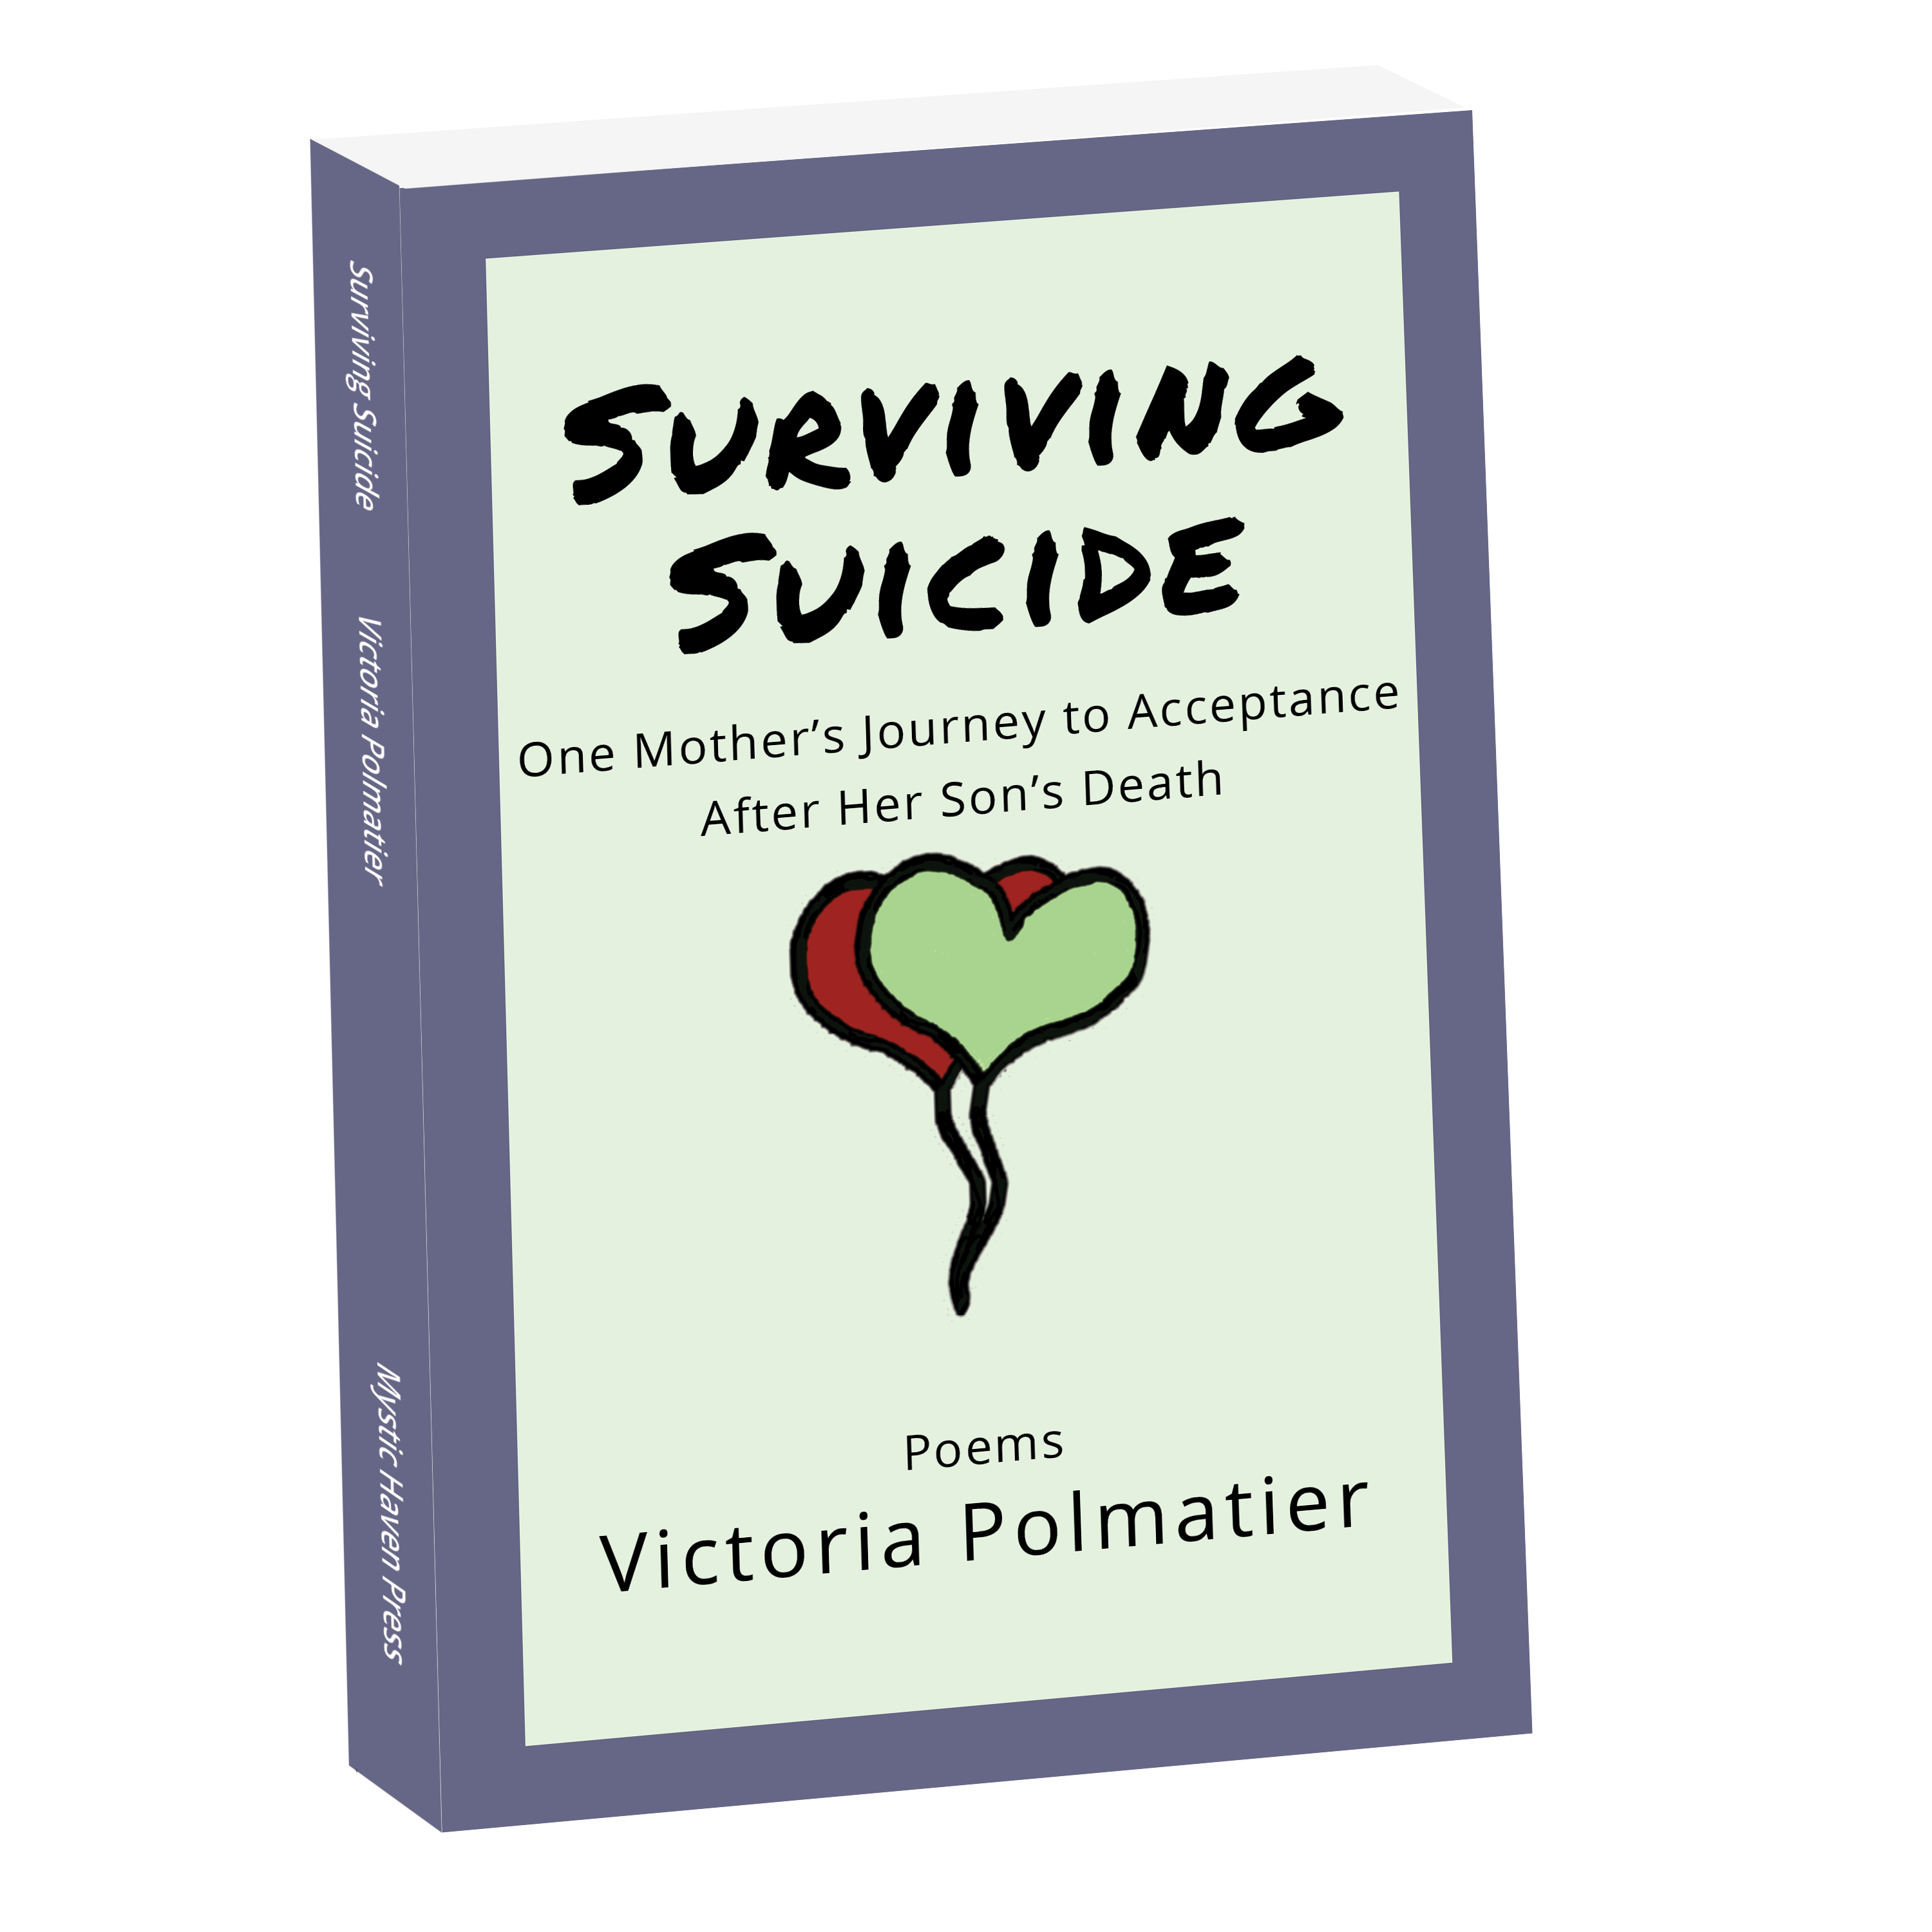 Surviving Suicide book cover